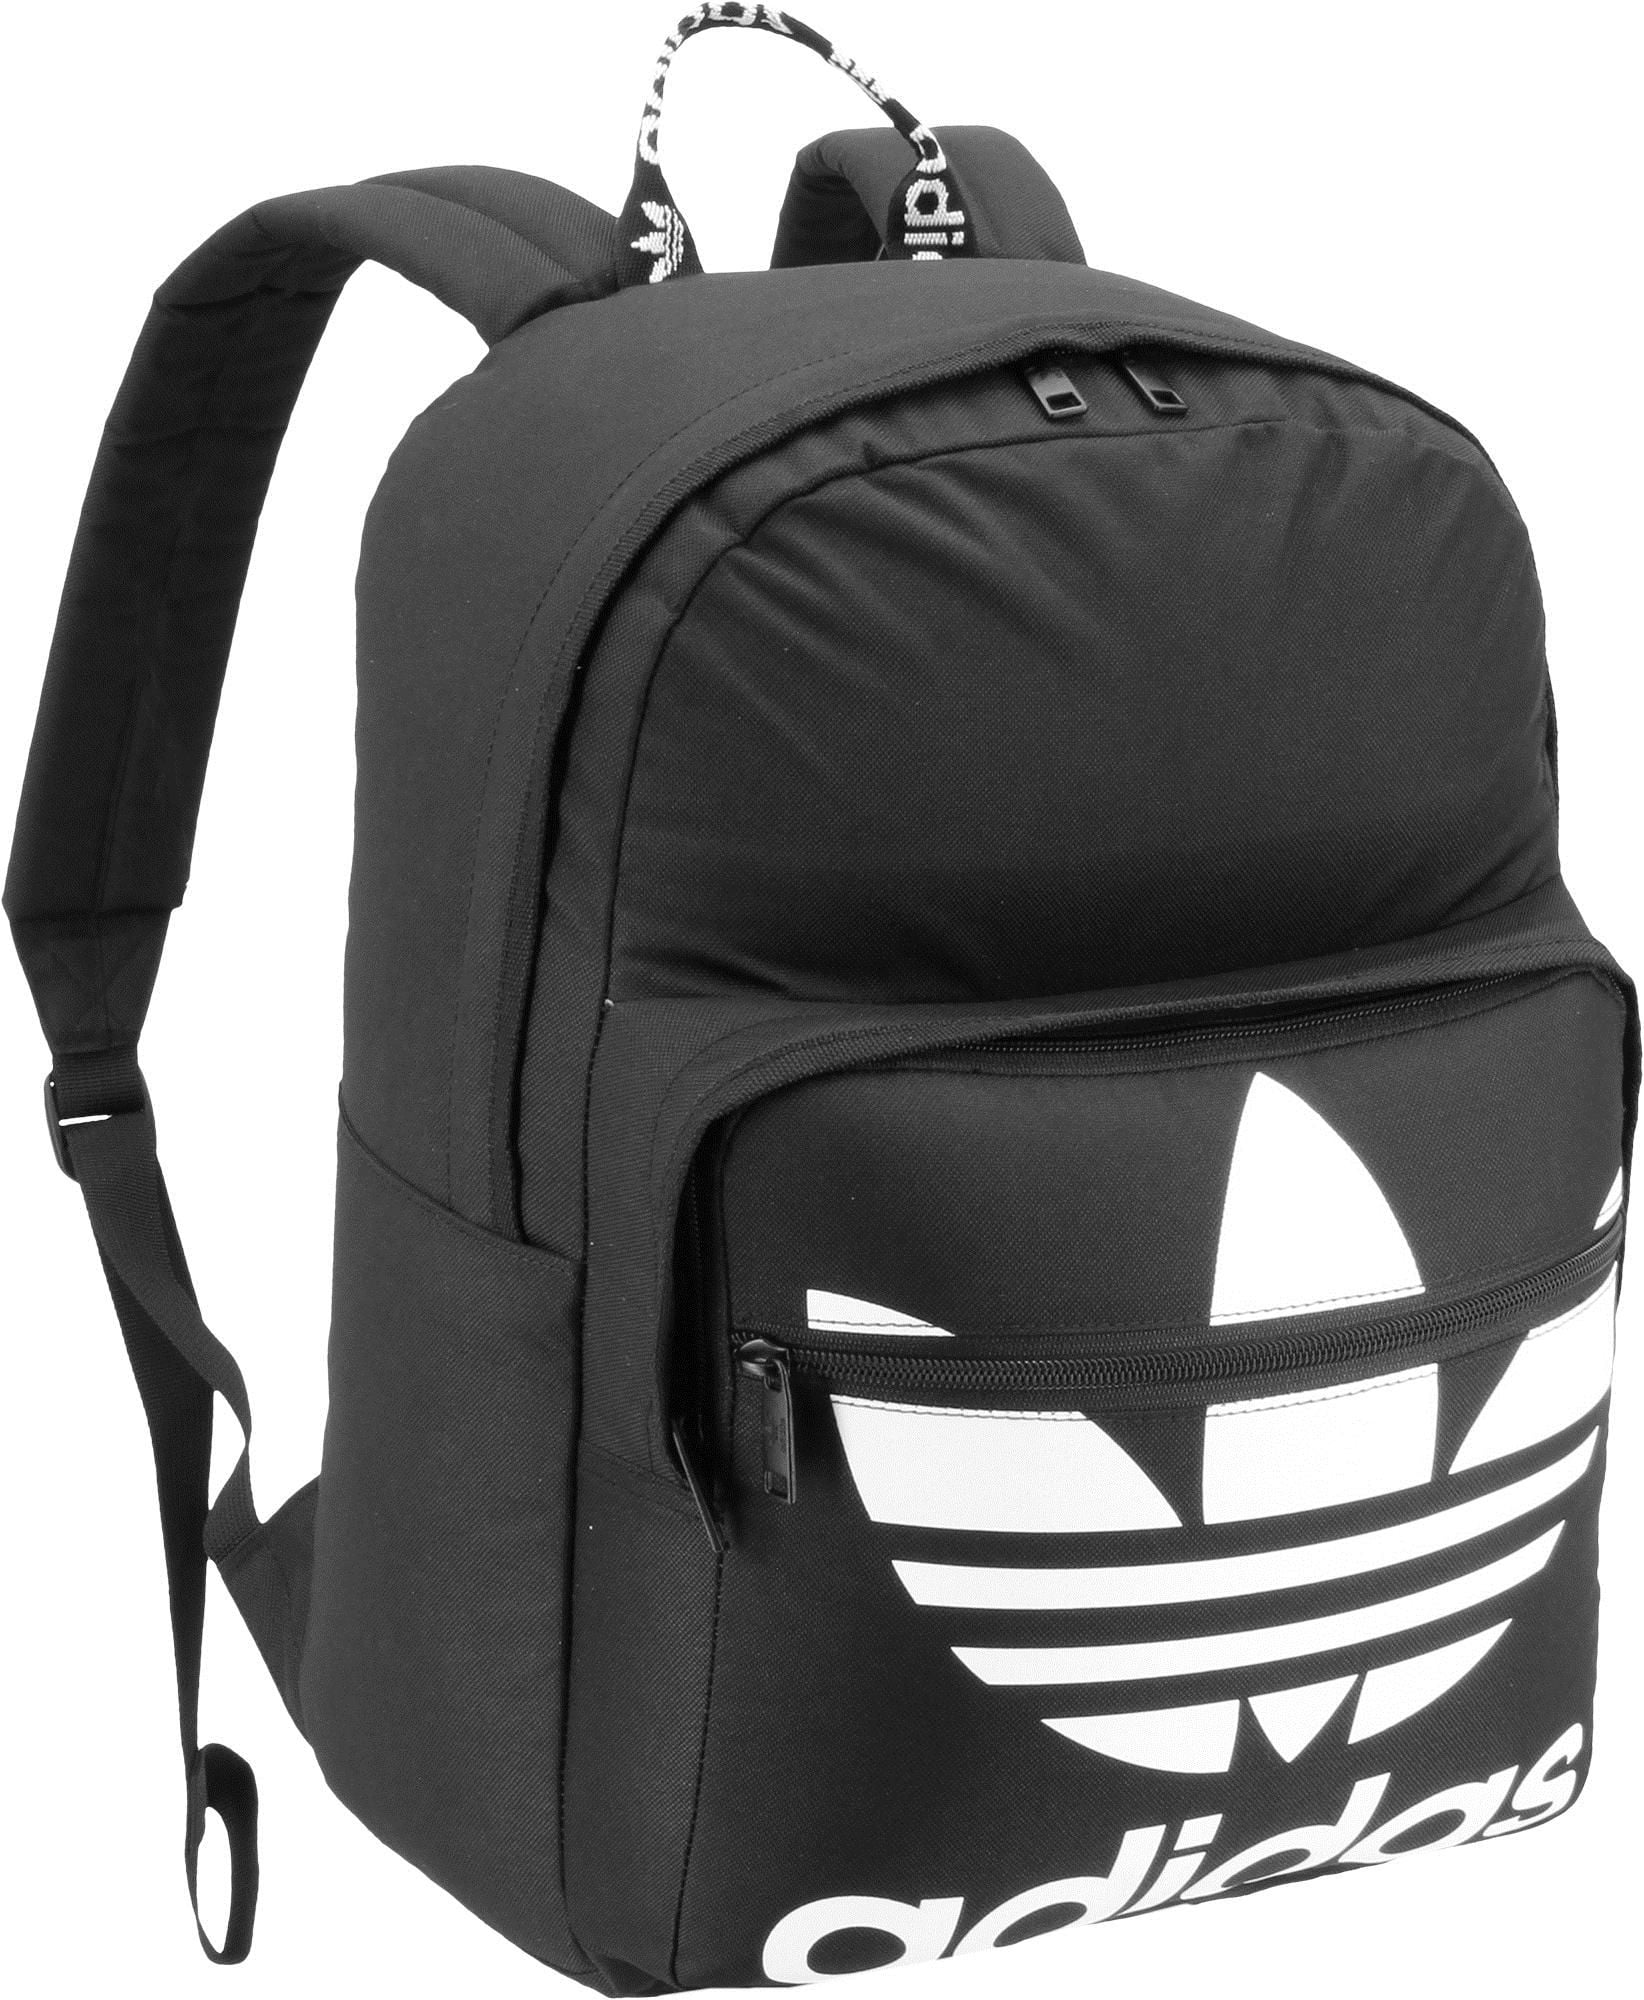 Adidas - adidas Originals Trefoil Pocket Backpack - Walmart.com